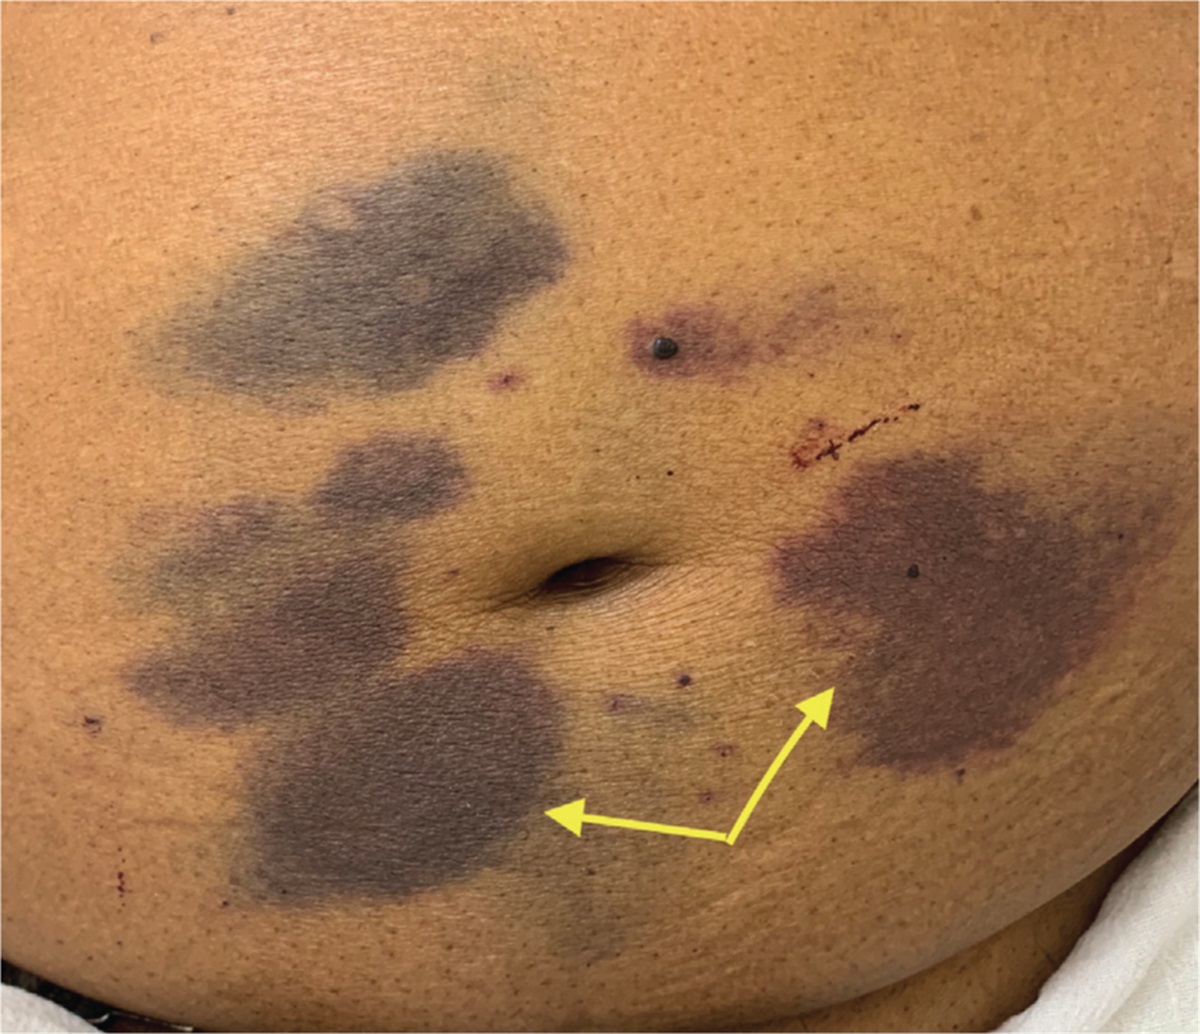 Anterior Abdominal Wall Ecchymosis in COVID-19 Patient Following Enoxaparin Use